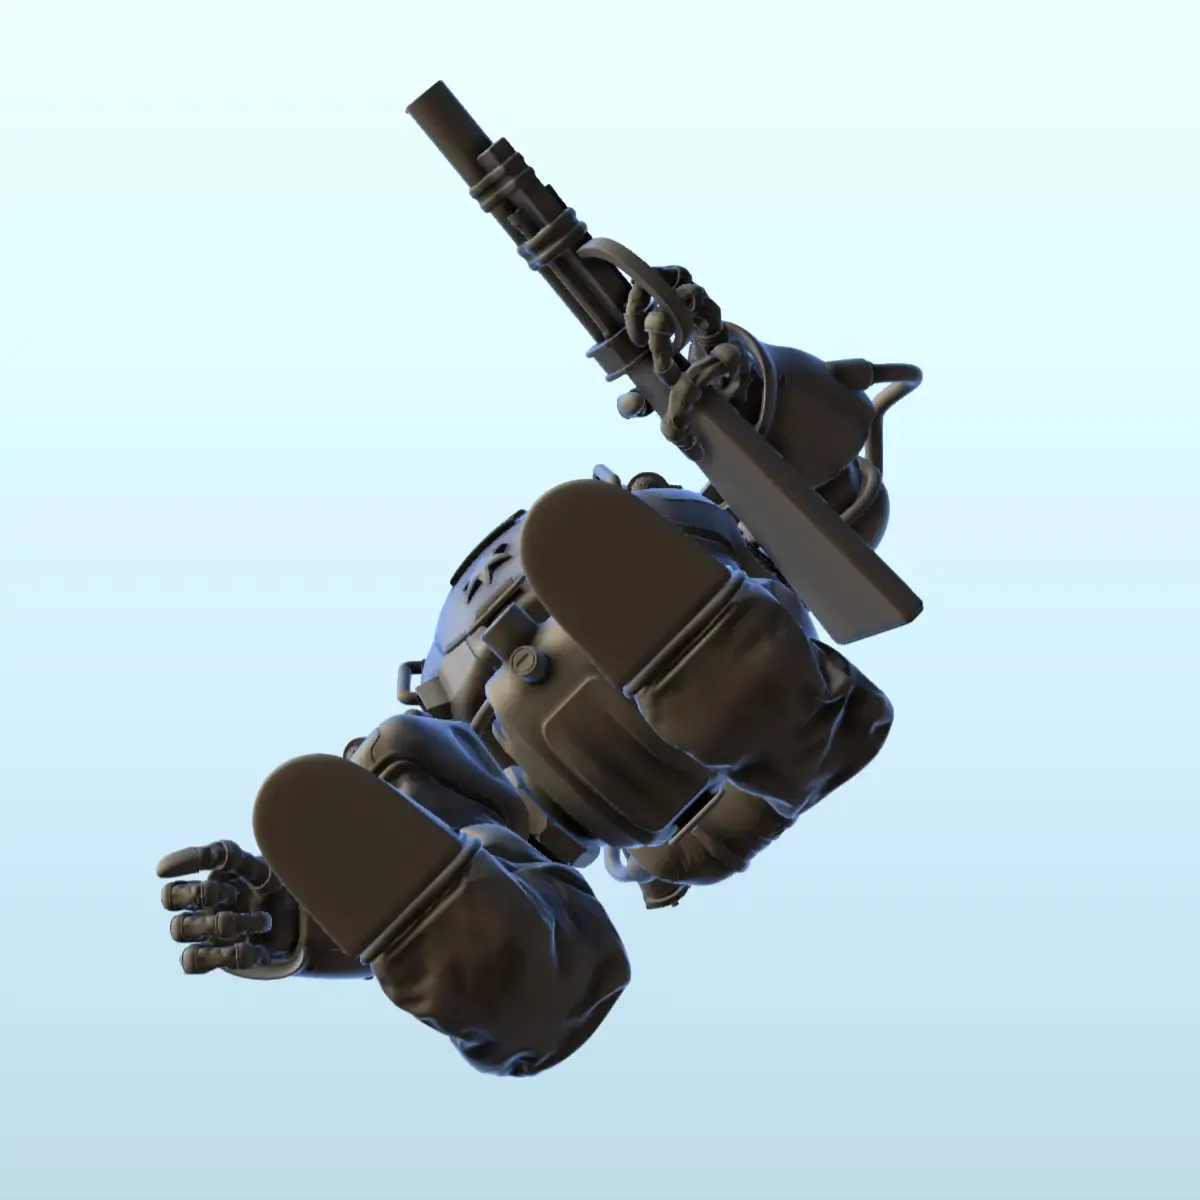 Qheone combat robot (27) - sci-fi science fiction future 40k